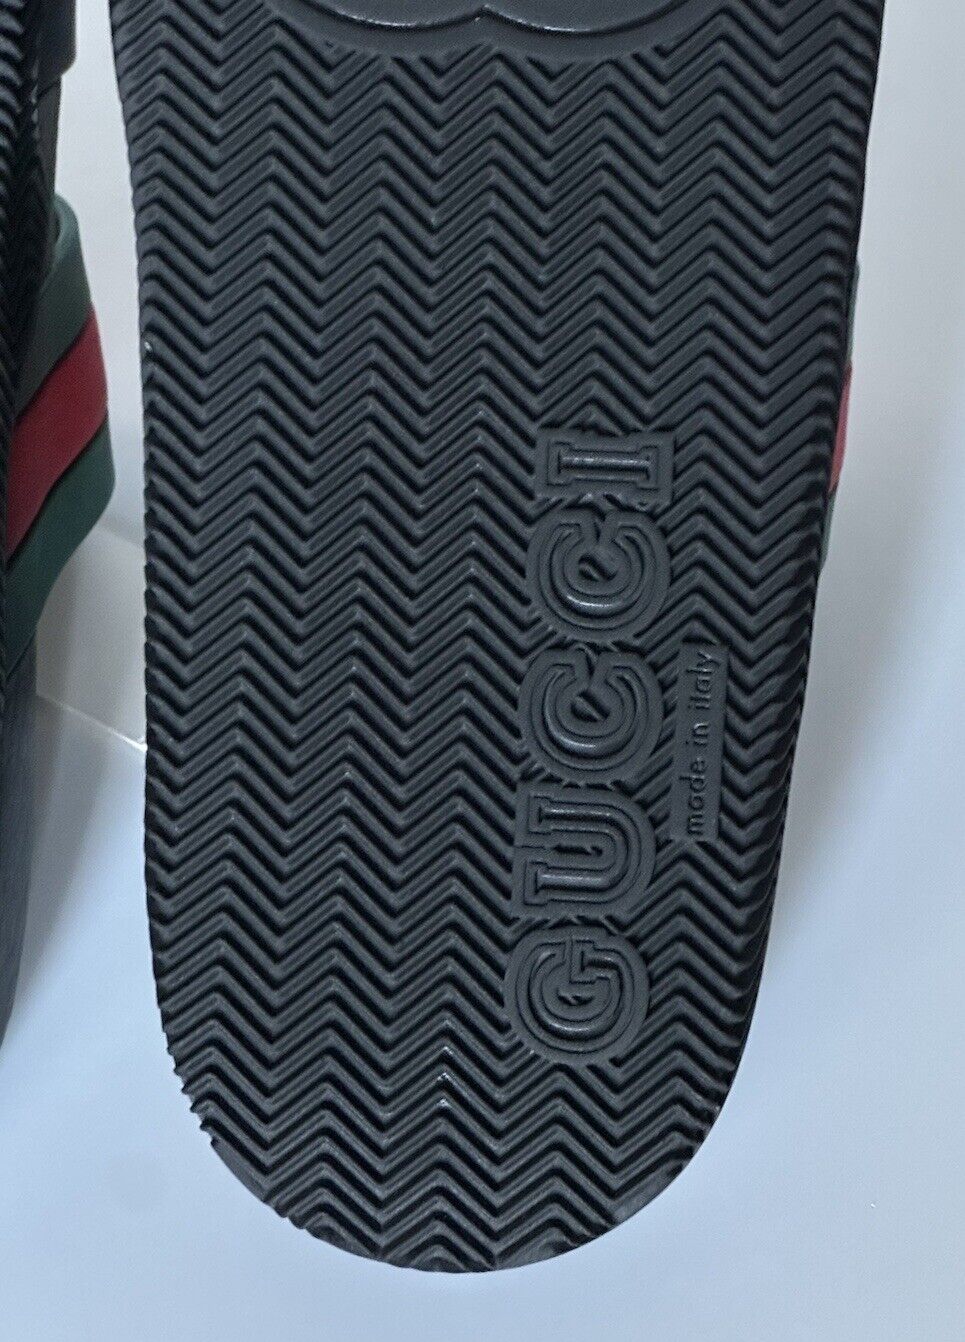 NIB Gucci Women's Rubber Slide Sandals Green/Red/Blue 11 US (Gucci 10) 692381 IT